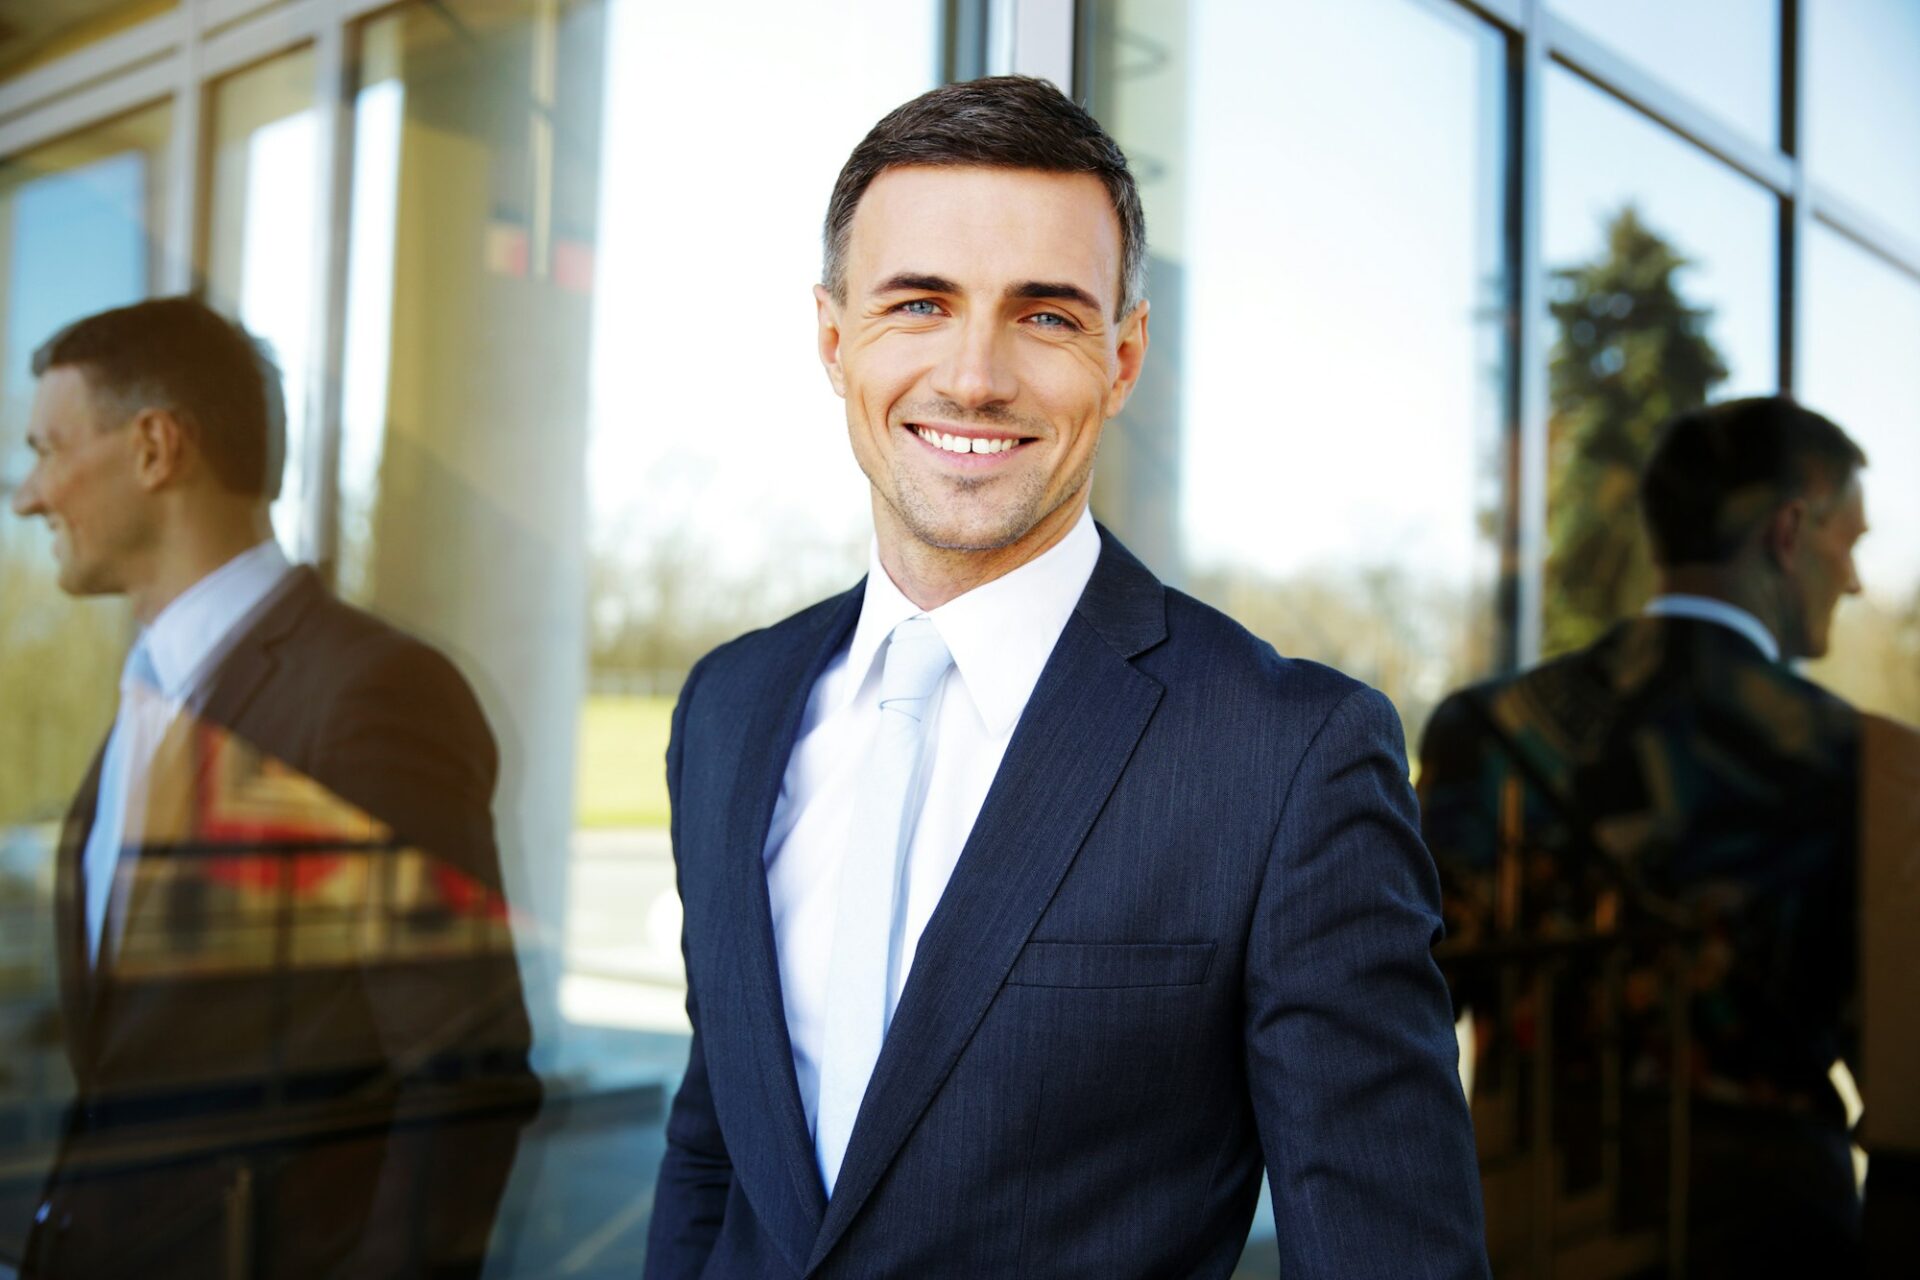 Portrait of a smiling handsome businessman in suit